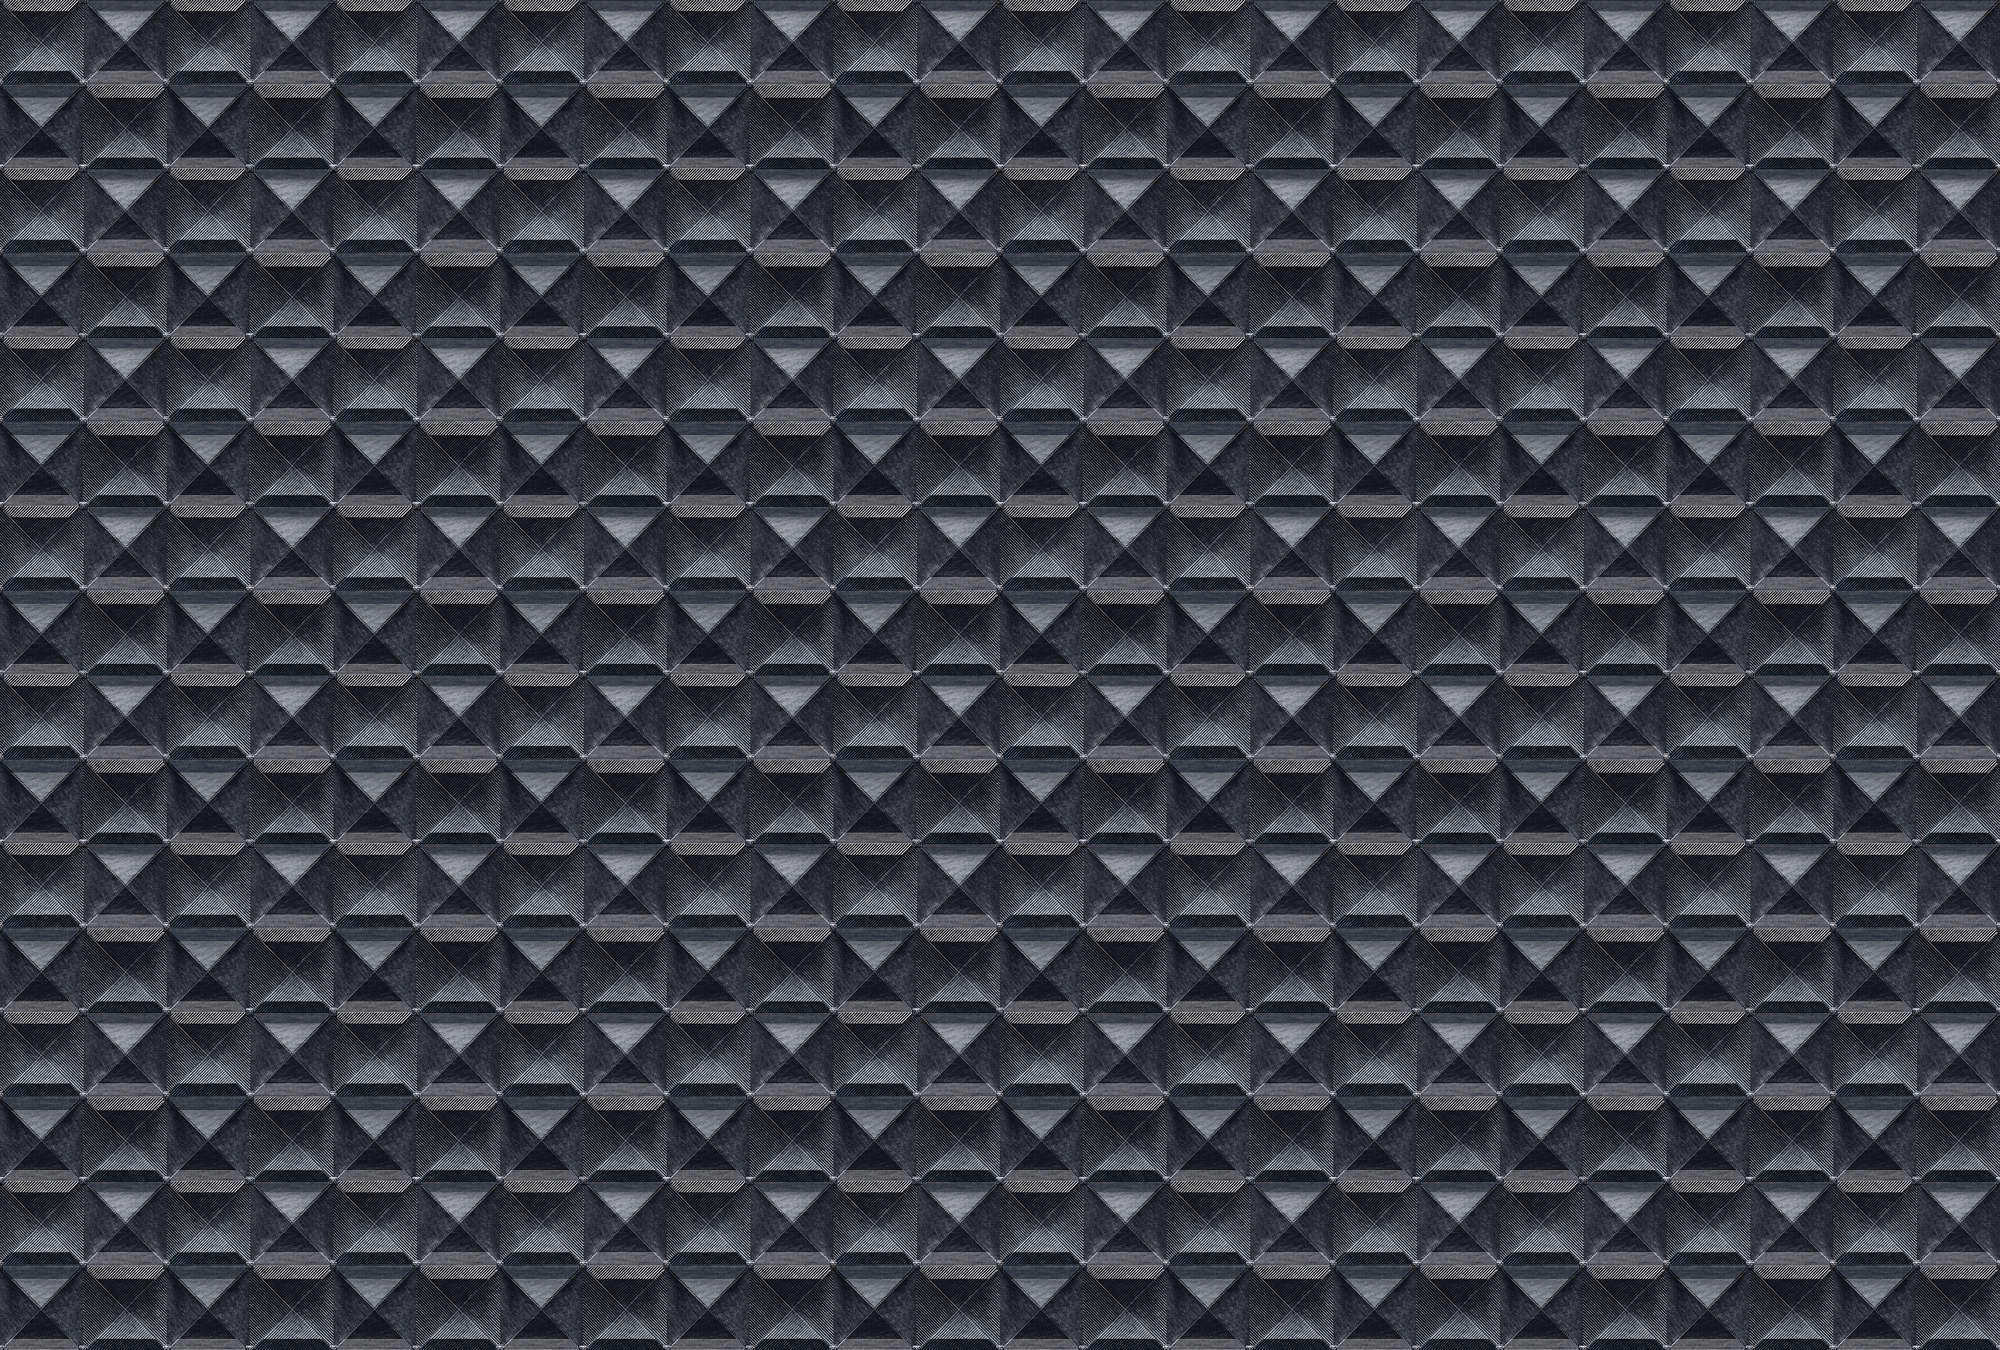             The edge 2 - 3D Photo wallpaper with lozenge metal design - Blue, Black | Textured non-woven
        